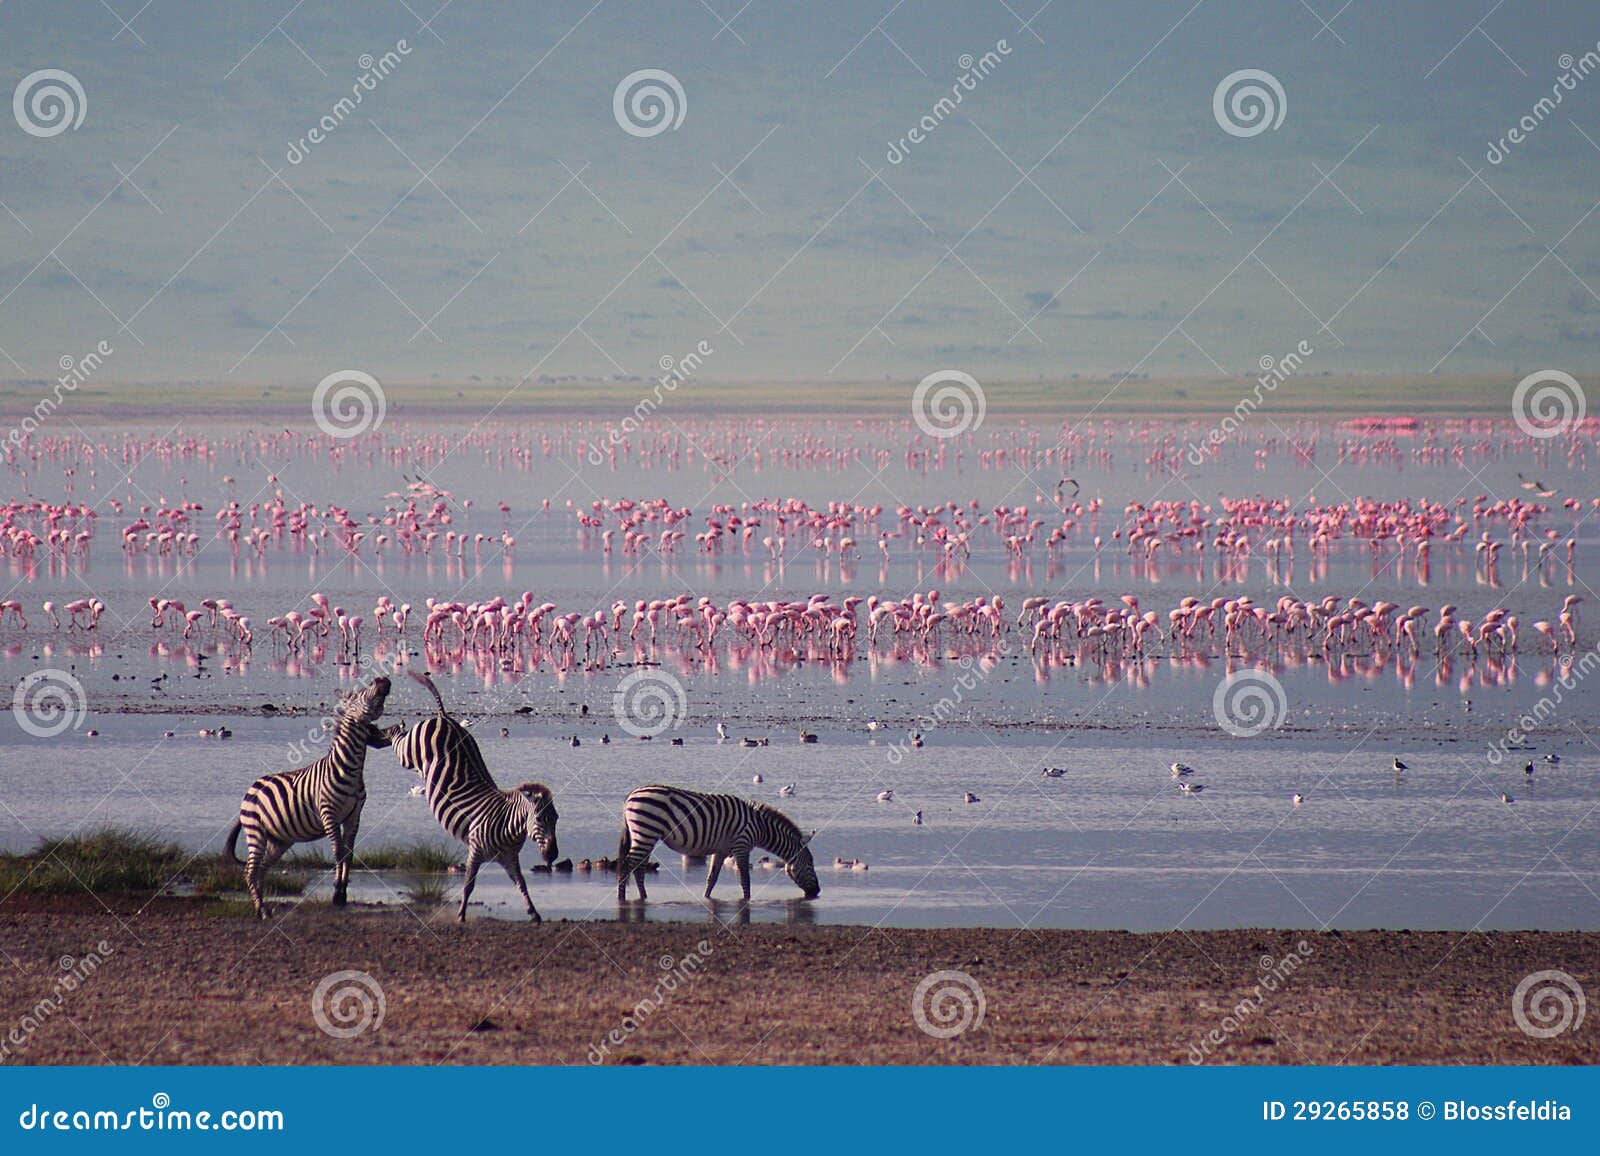 zebras and flamingo in ngorongoro